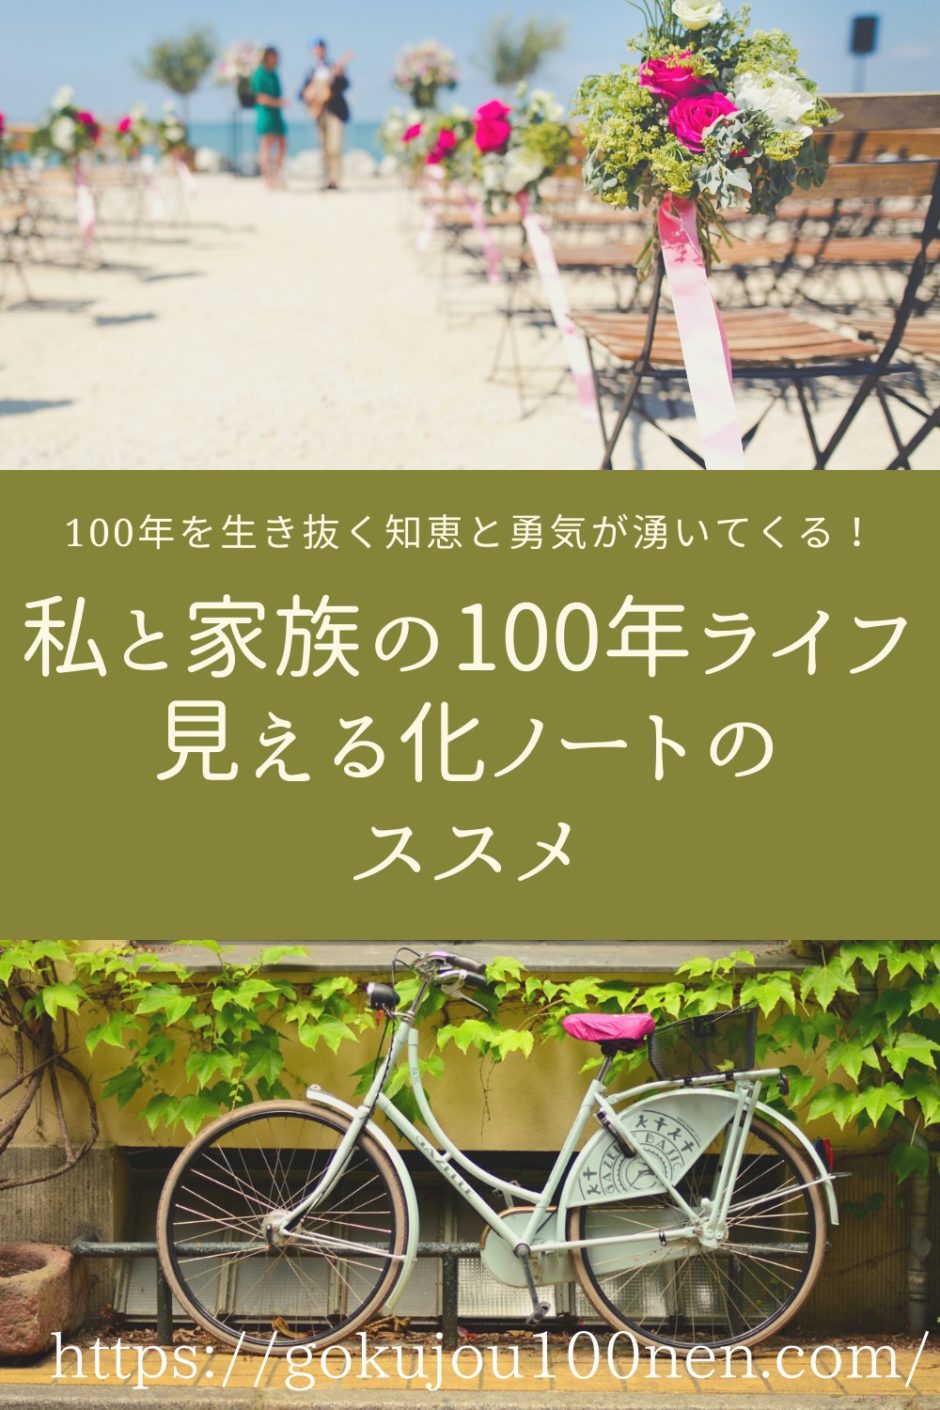 100life